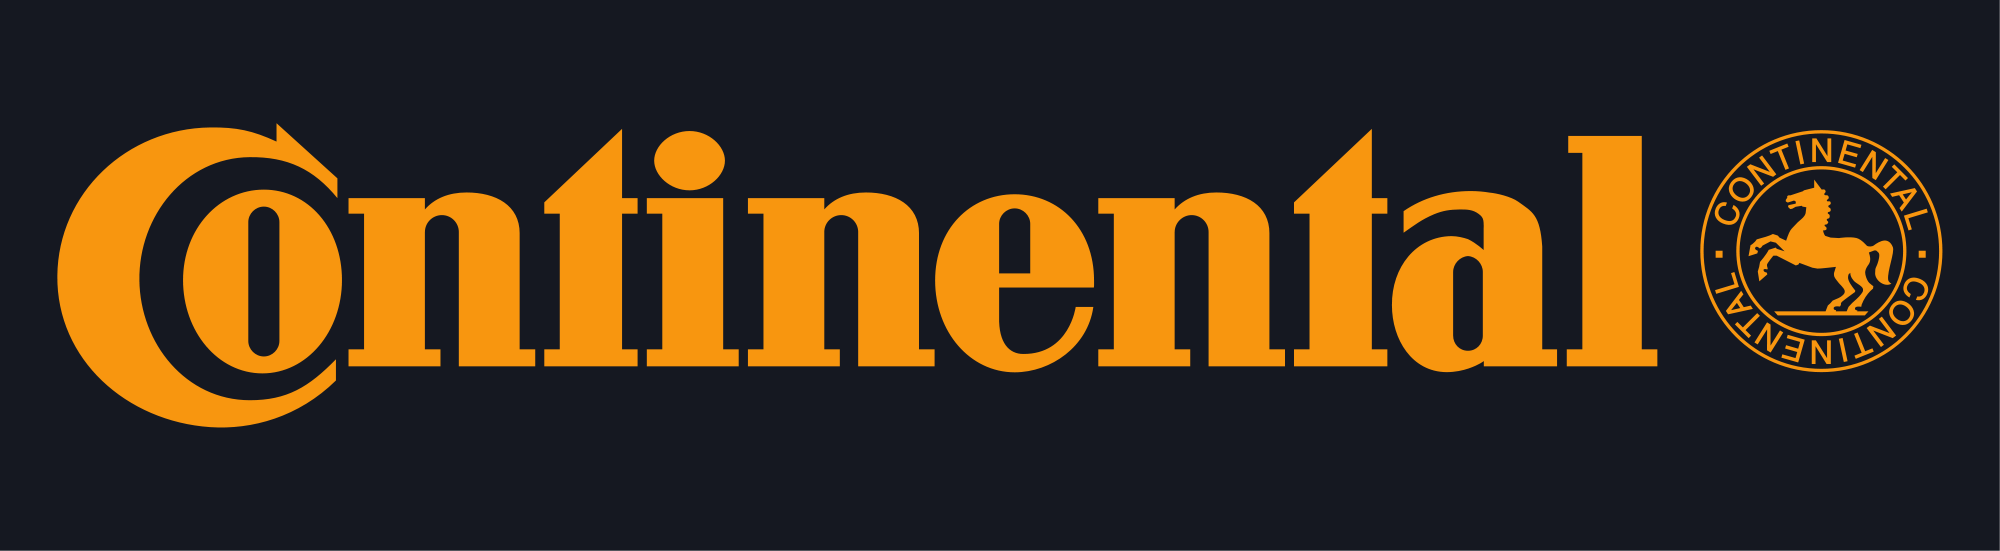 Filename: continental-logo.pn